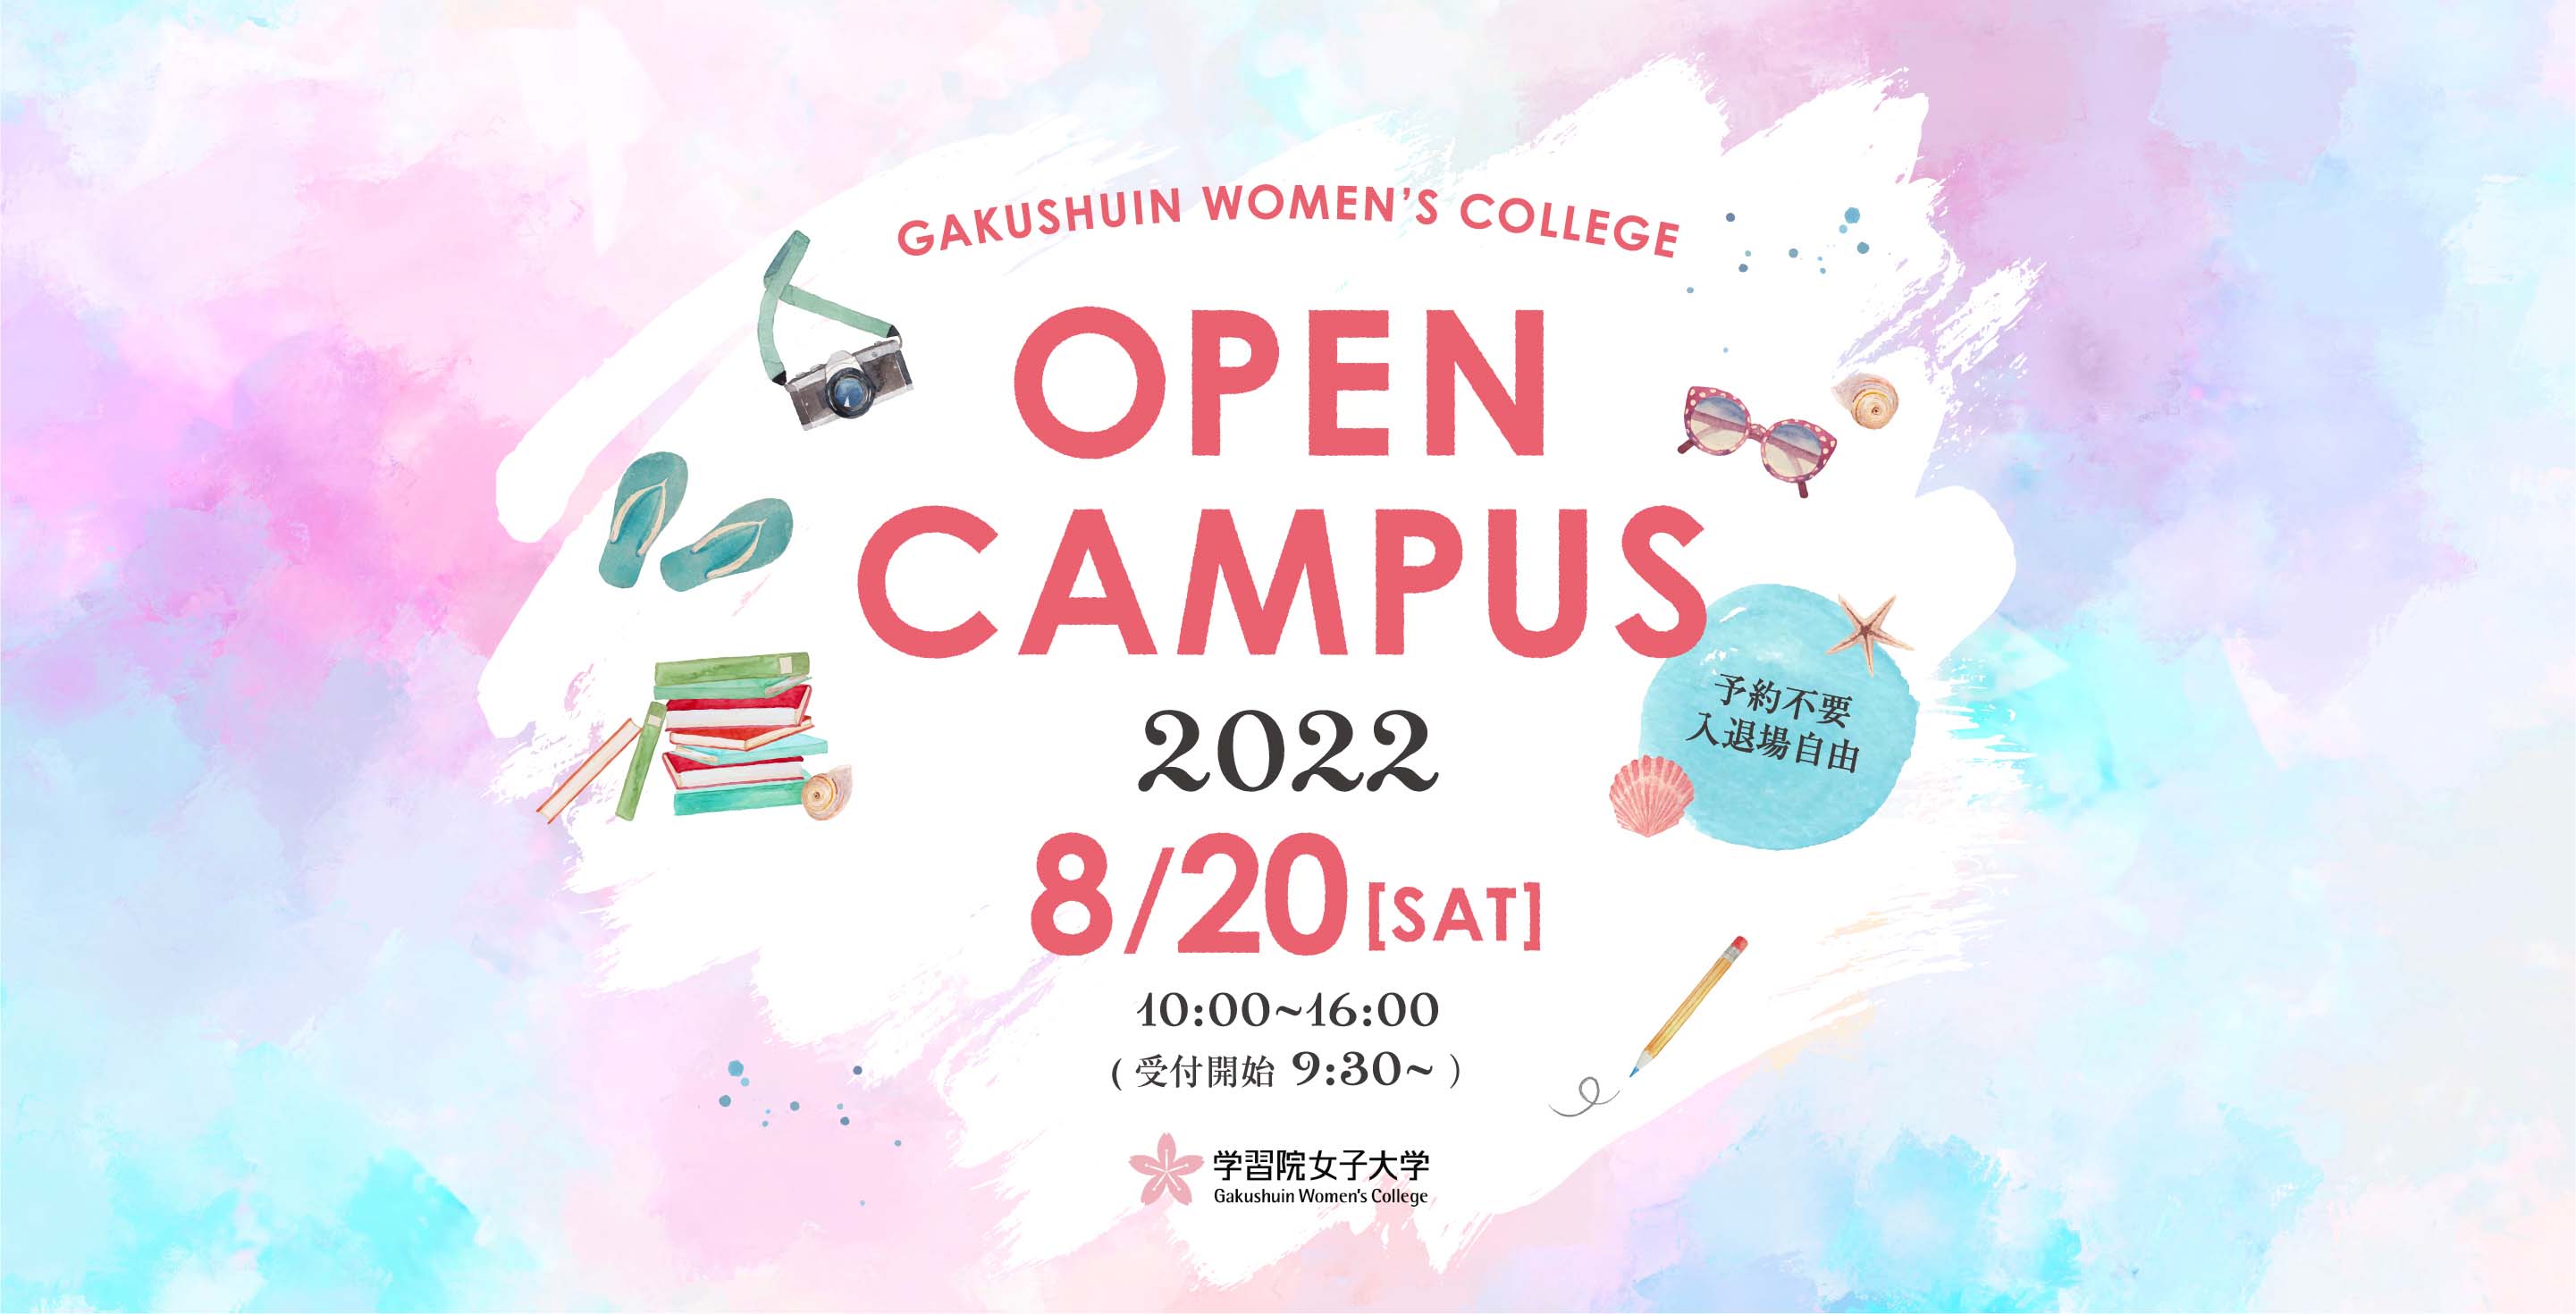 OPEN CAMPUS 2022 8/20(SAT) 学習院女子大学